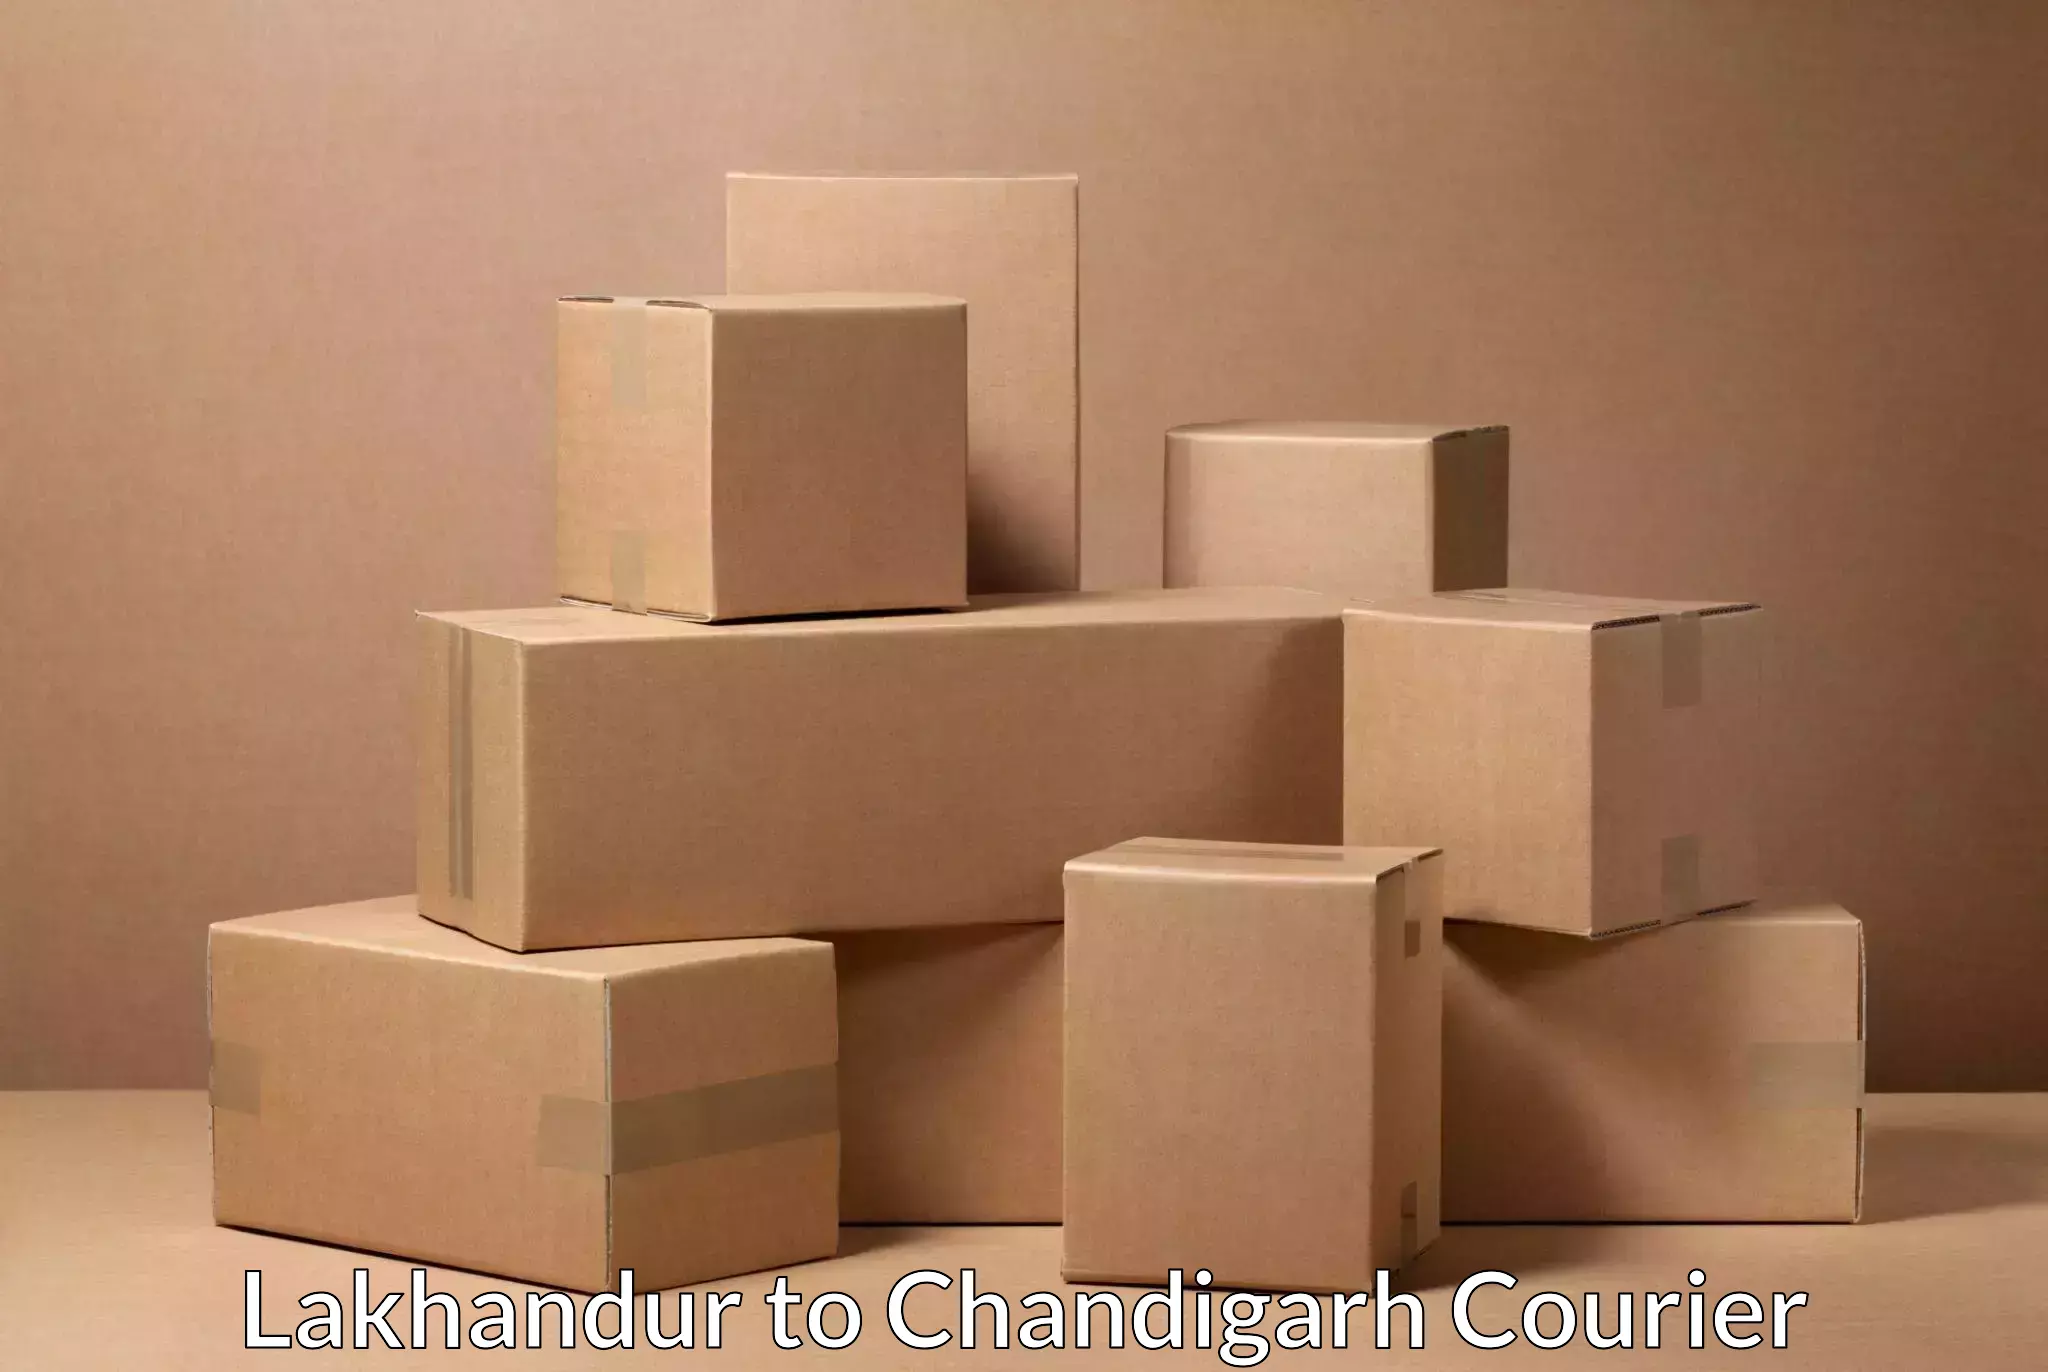 Efficient order fulfillment Lakhandur to Chandigarh